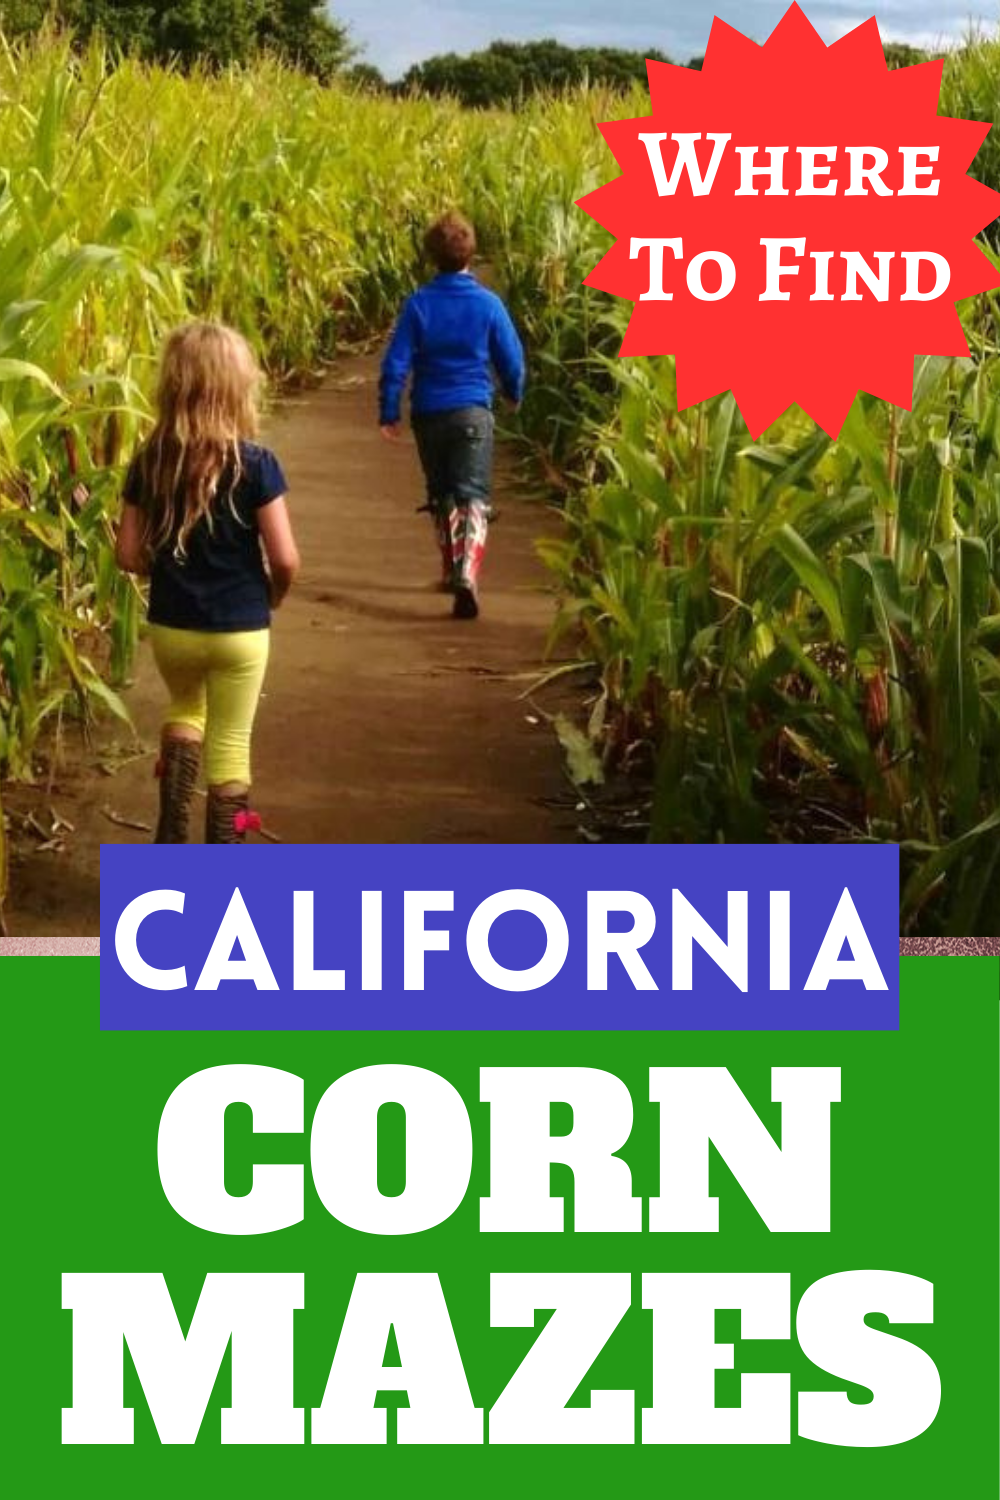 corn mazes in california